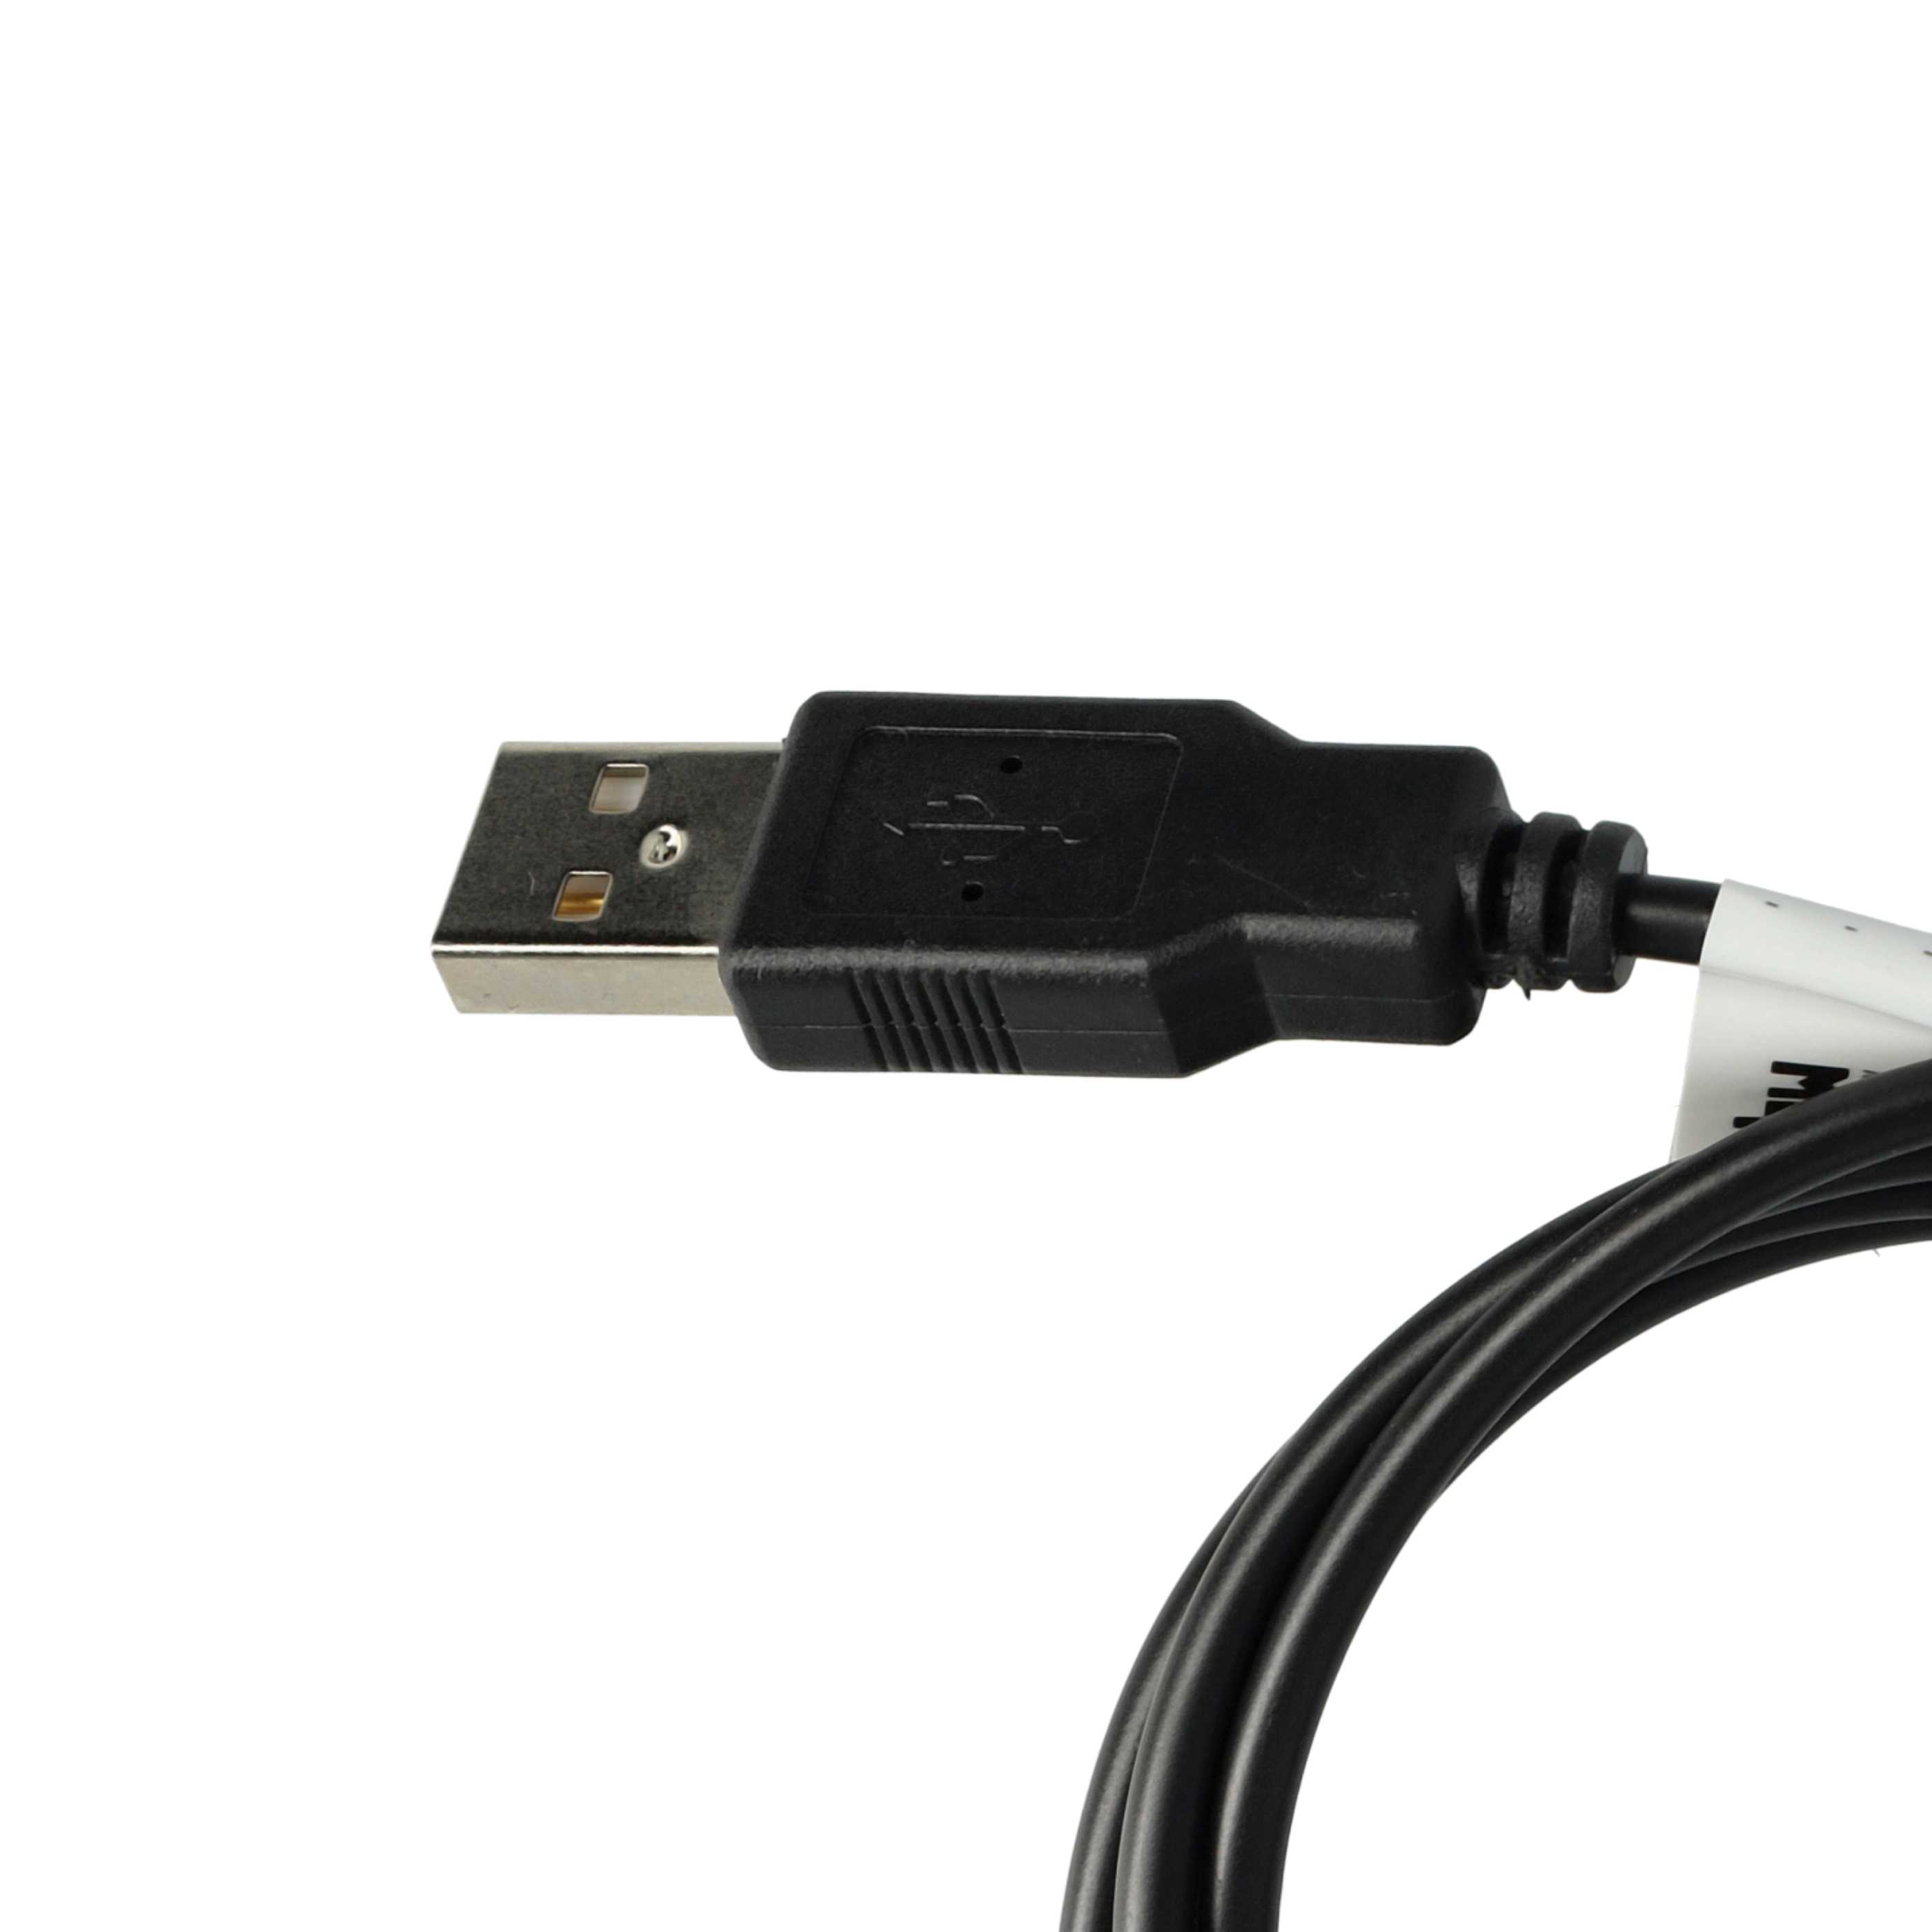 USB Datenkabel als Ersatz für Nikon UC-E15, UC-E3, UC-E4, UC-E5 für Kamera u.a. - 100 cm